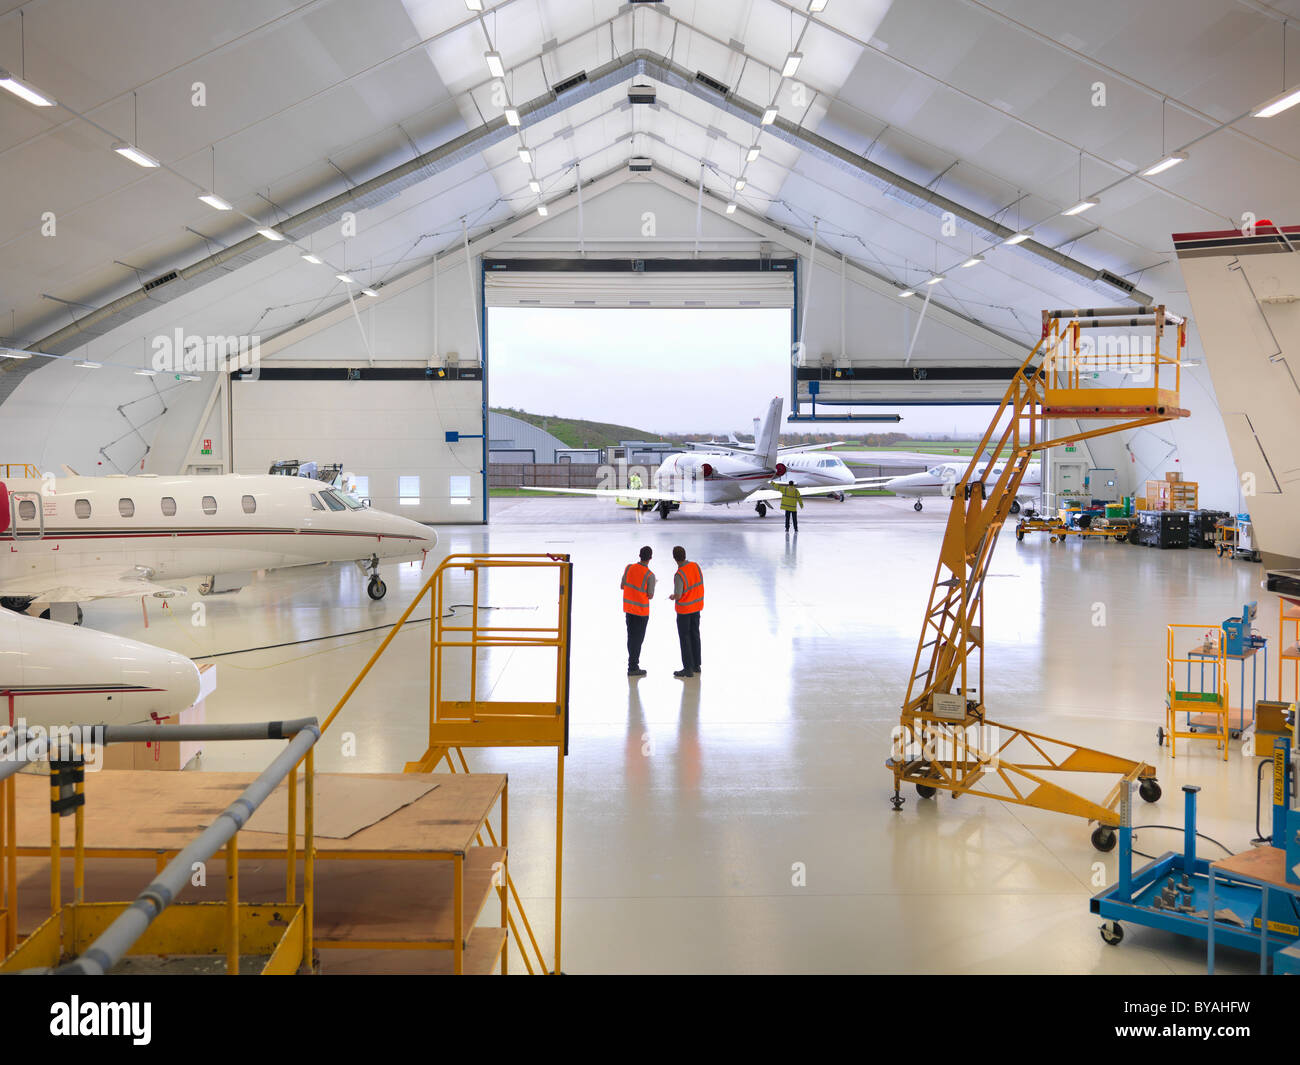 Engineers in jet aircraft hangar Stock Photo